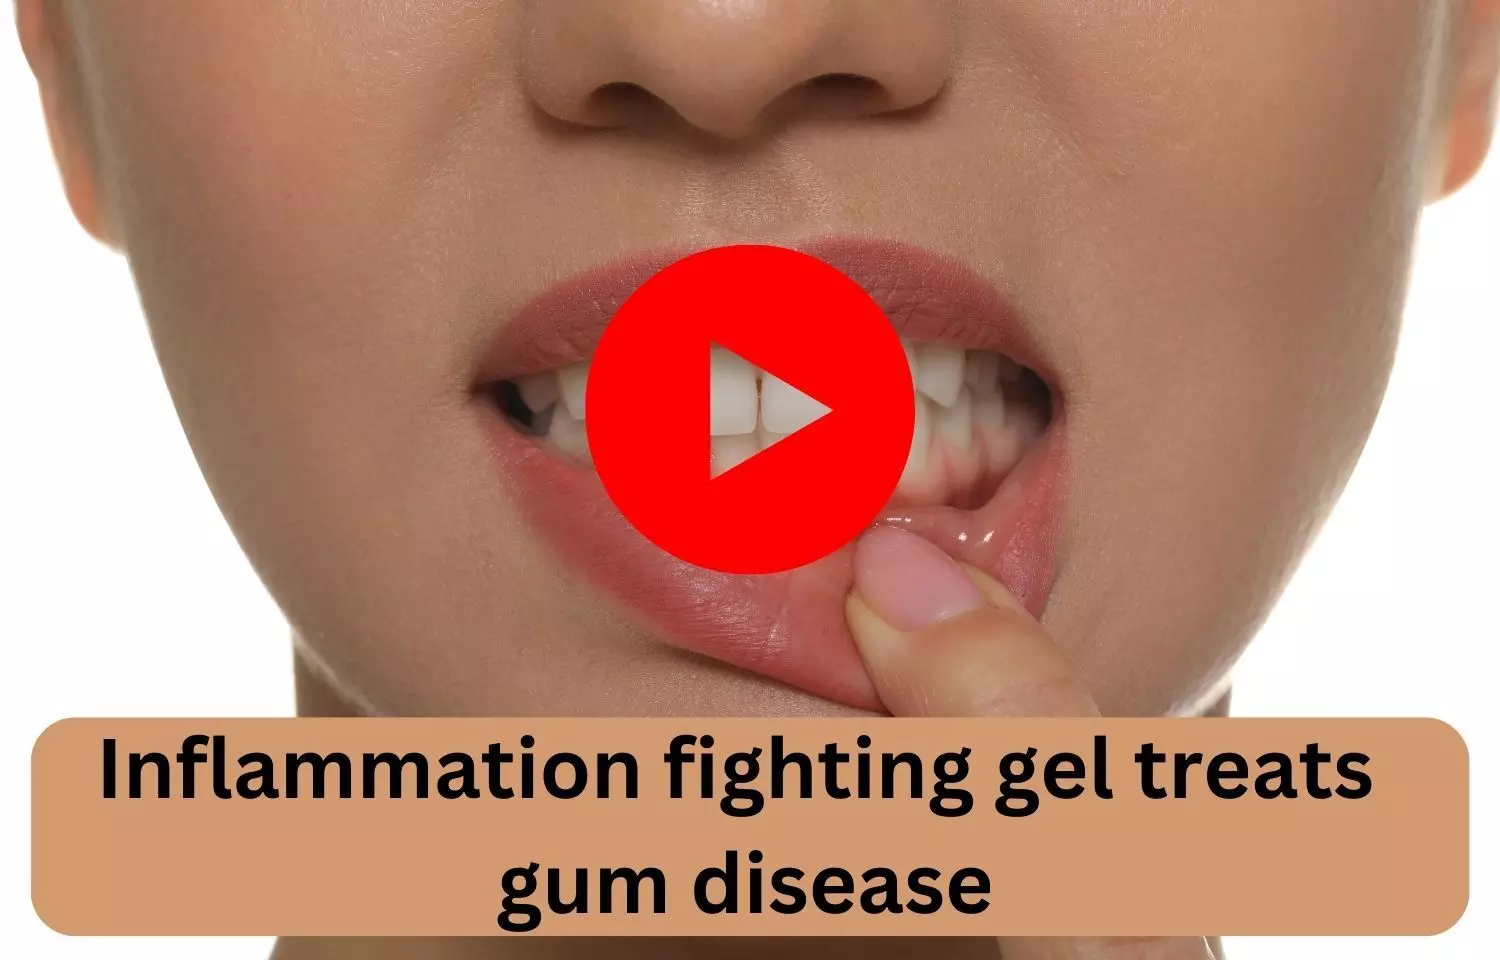 Inflammation fighting gel treats gum disease